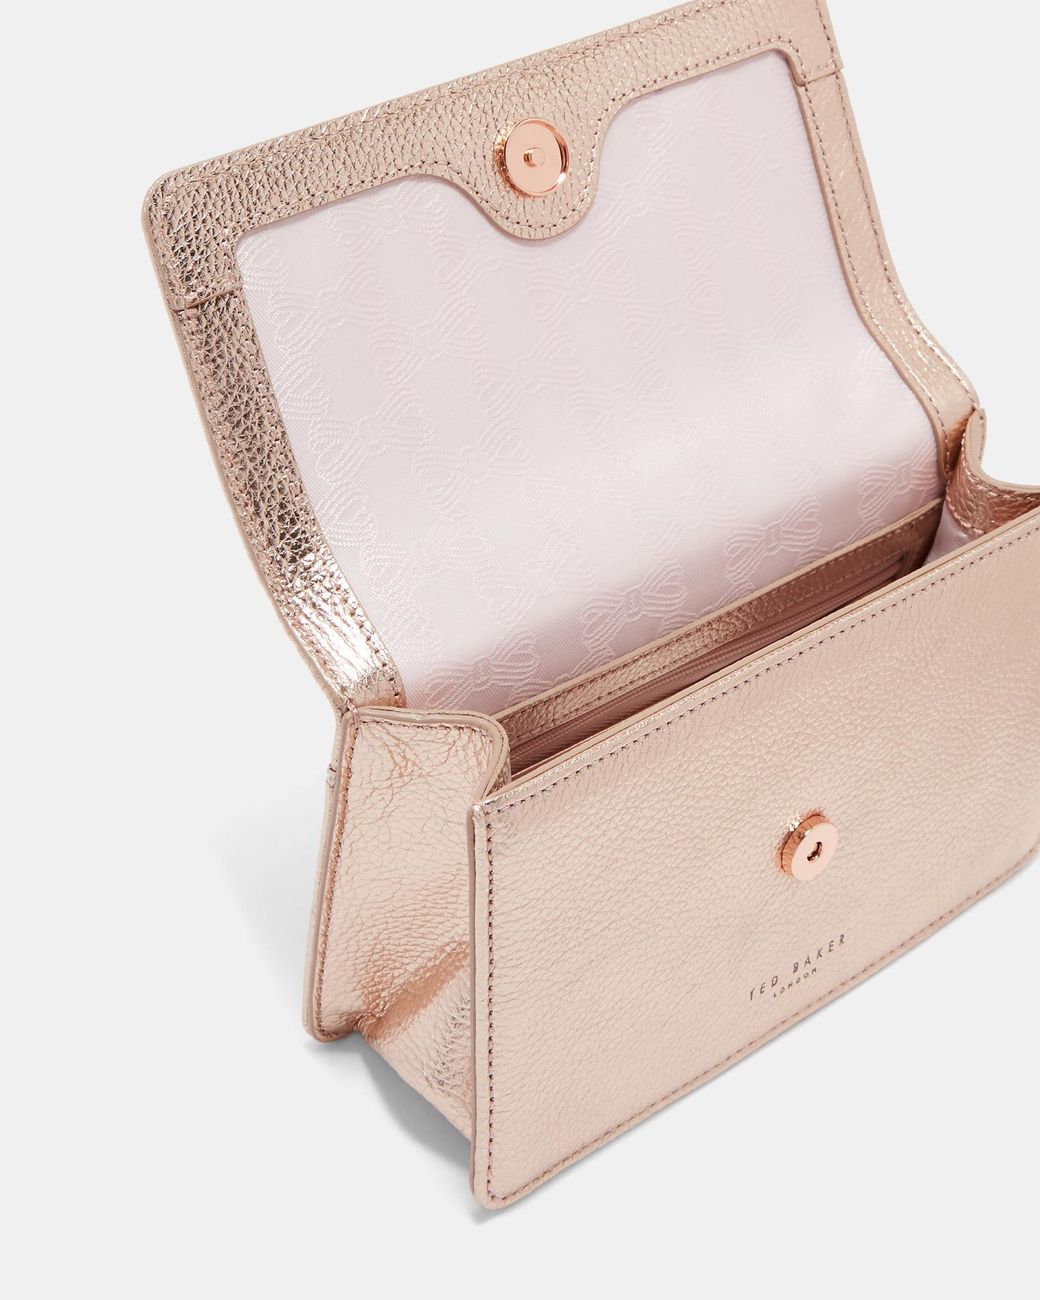 RARE Ted Baker Pink Leather Purse Adjustable Straps Silk Lined Rose Gold Bar